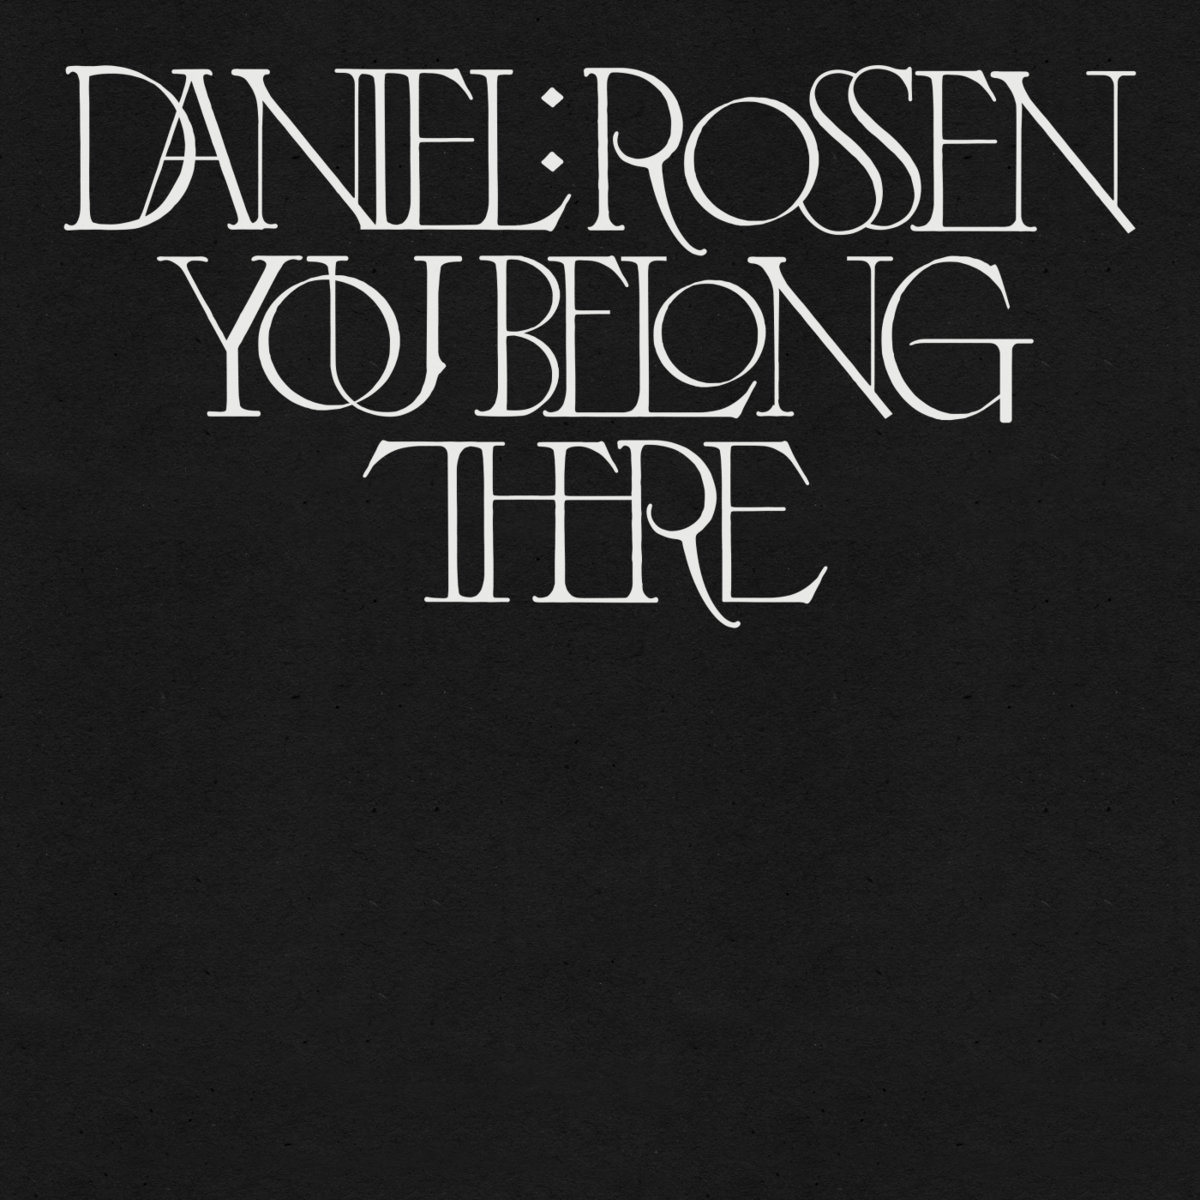 Daniel Rossen “You Belong There” LP